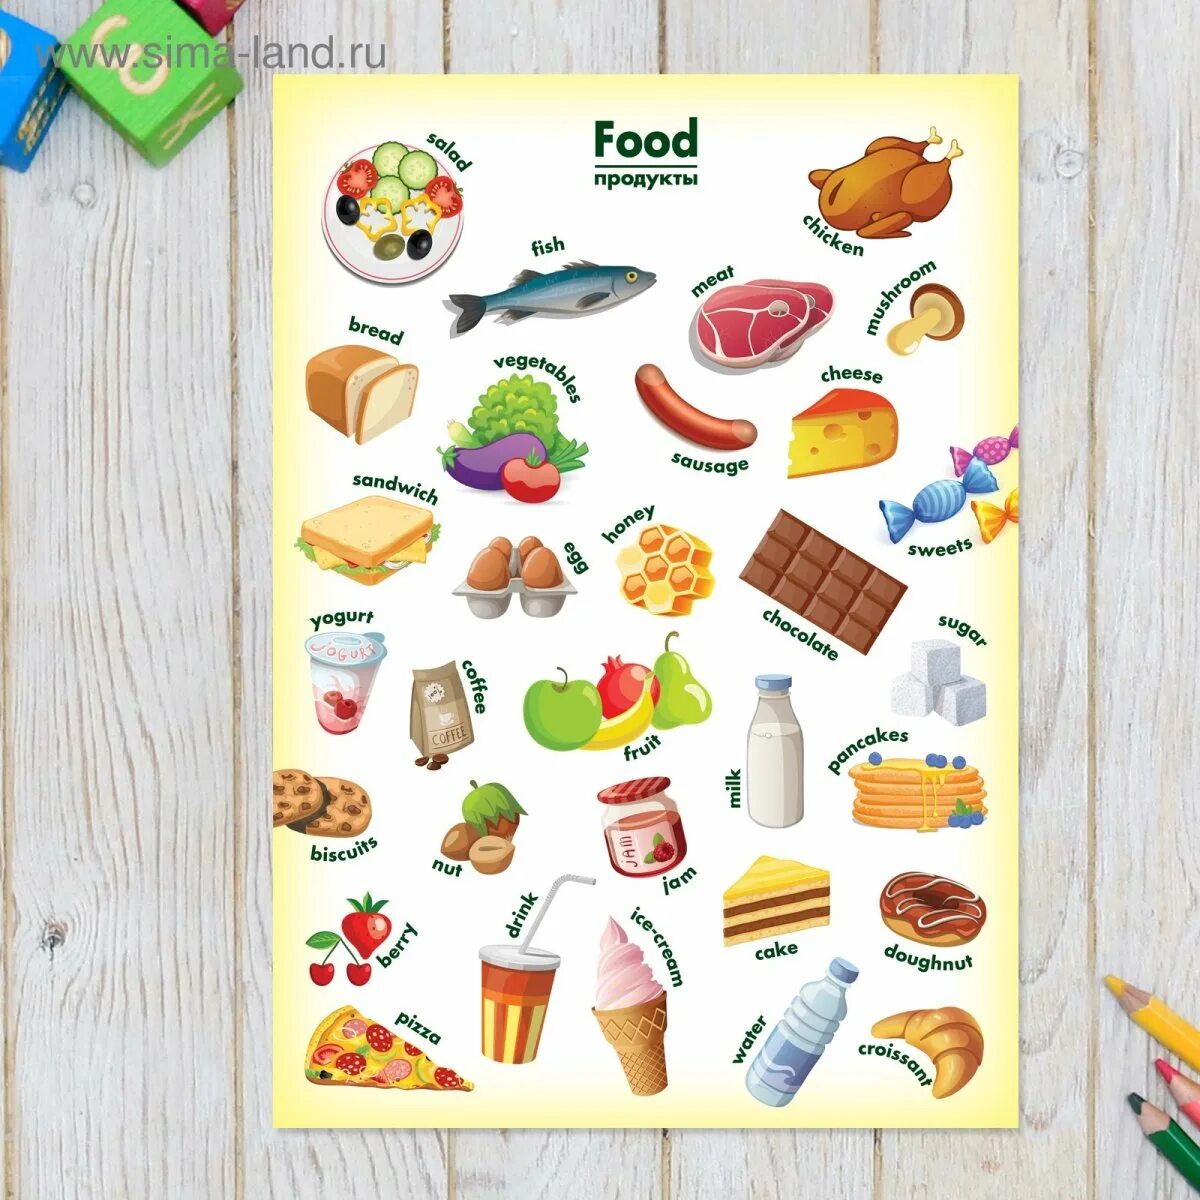 Карточки по теме еда. Карточки продуктов питания для детей. Продукты питания на английском. Карточки с продуктами на английском для детей. Еда 7 класс английский